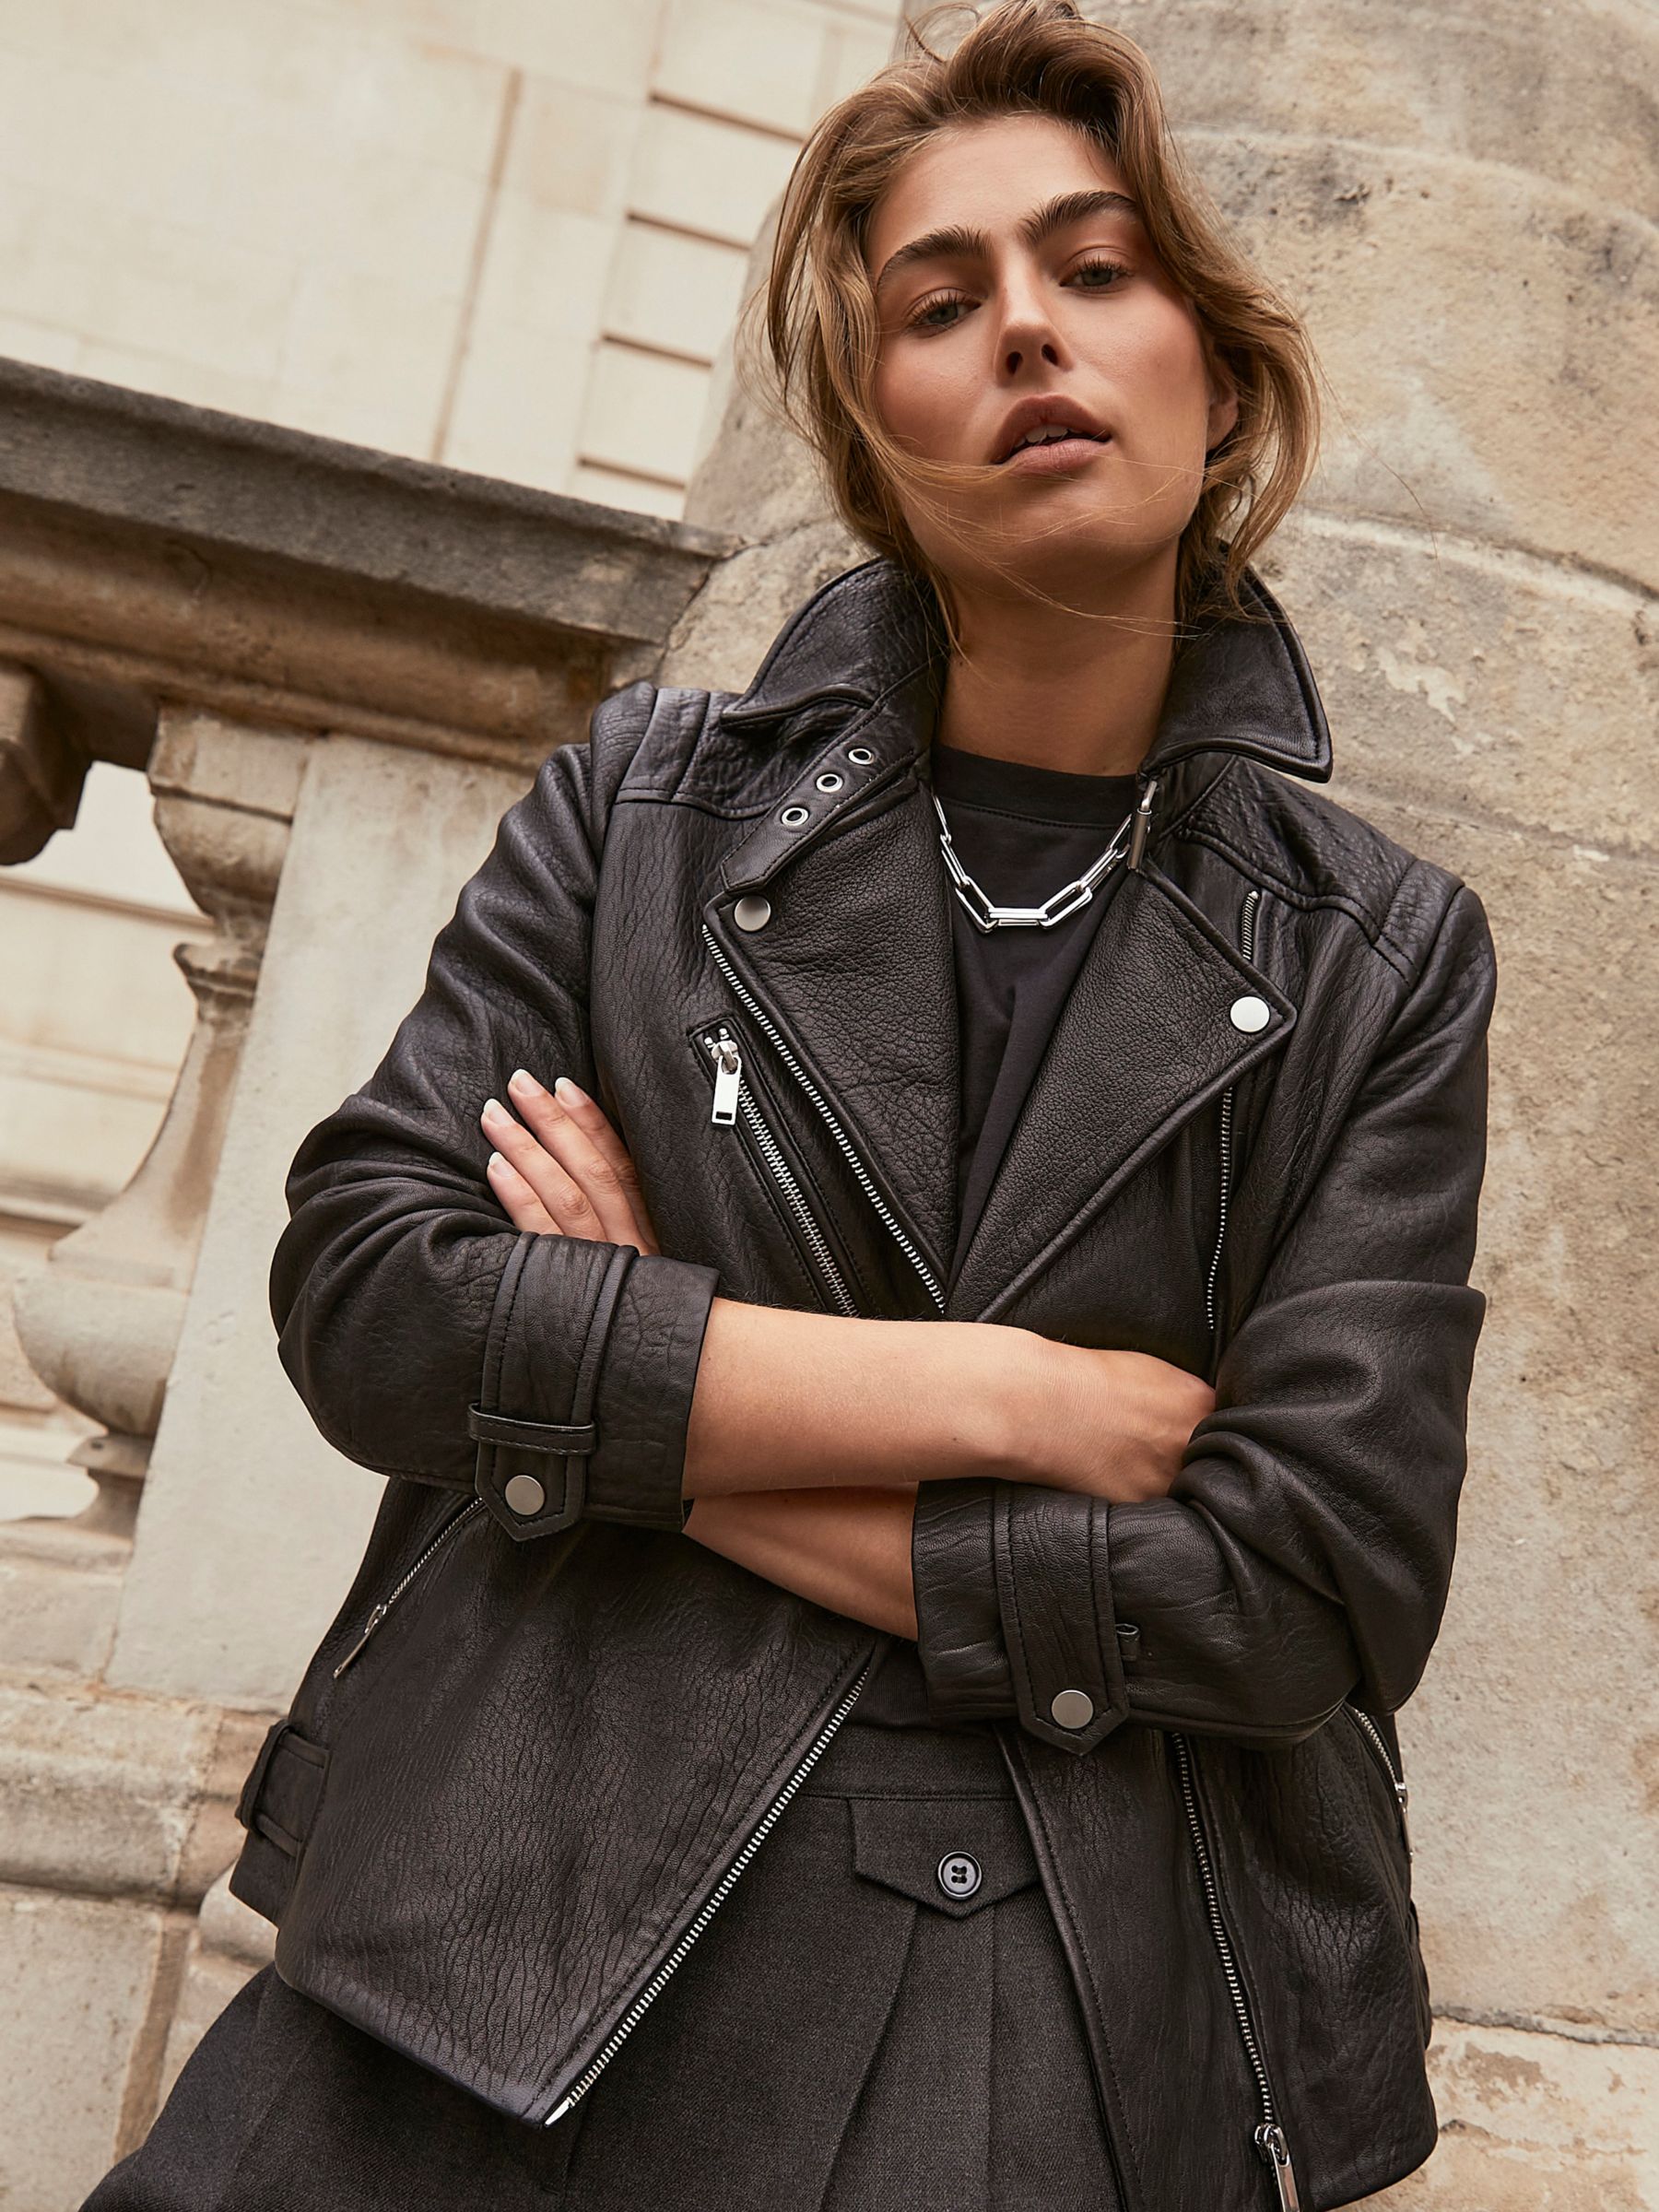 Men's Designer Leather Jackets & Mid-Layer Pieces